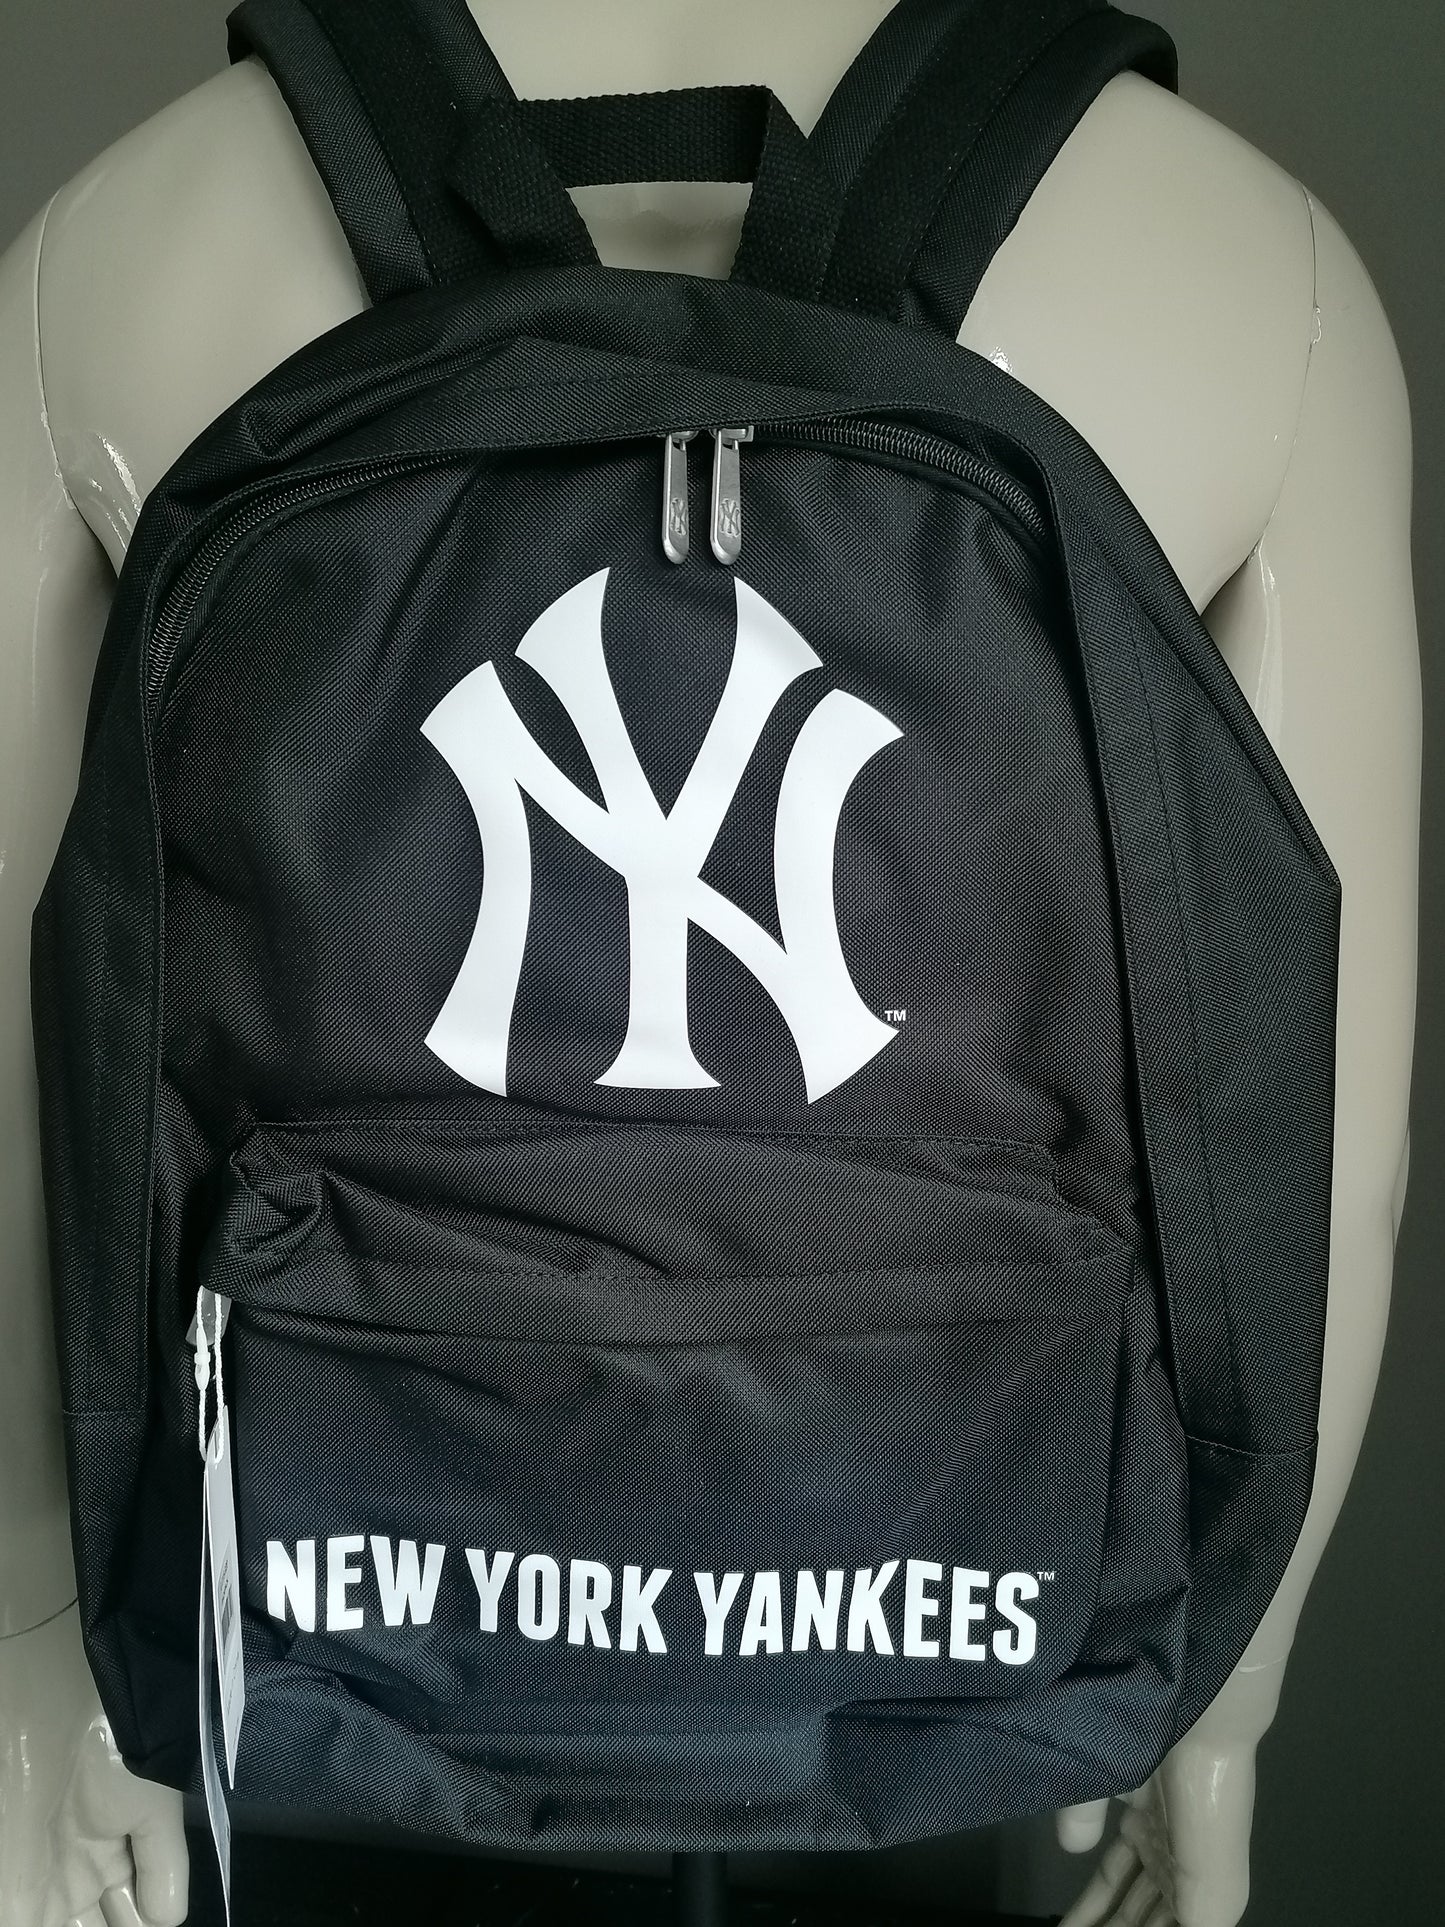 Major League Baseball original New York Yankees Rugzak / Backpack. Zwart Wit. Dubbele binnenzak.